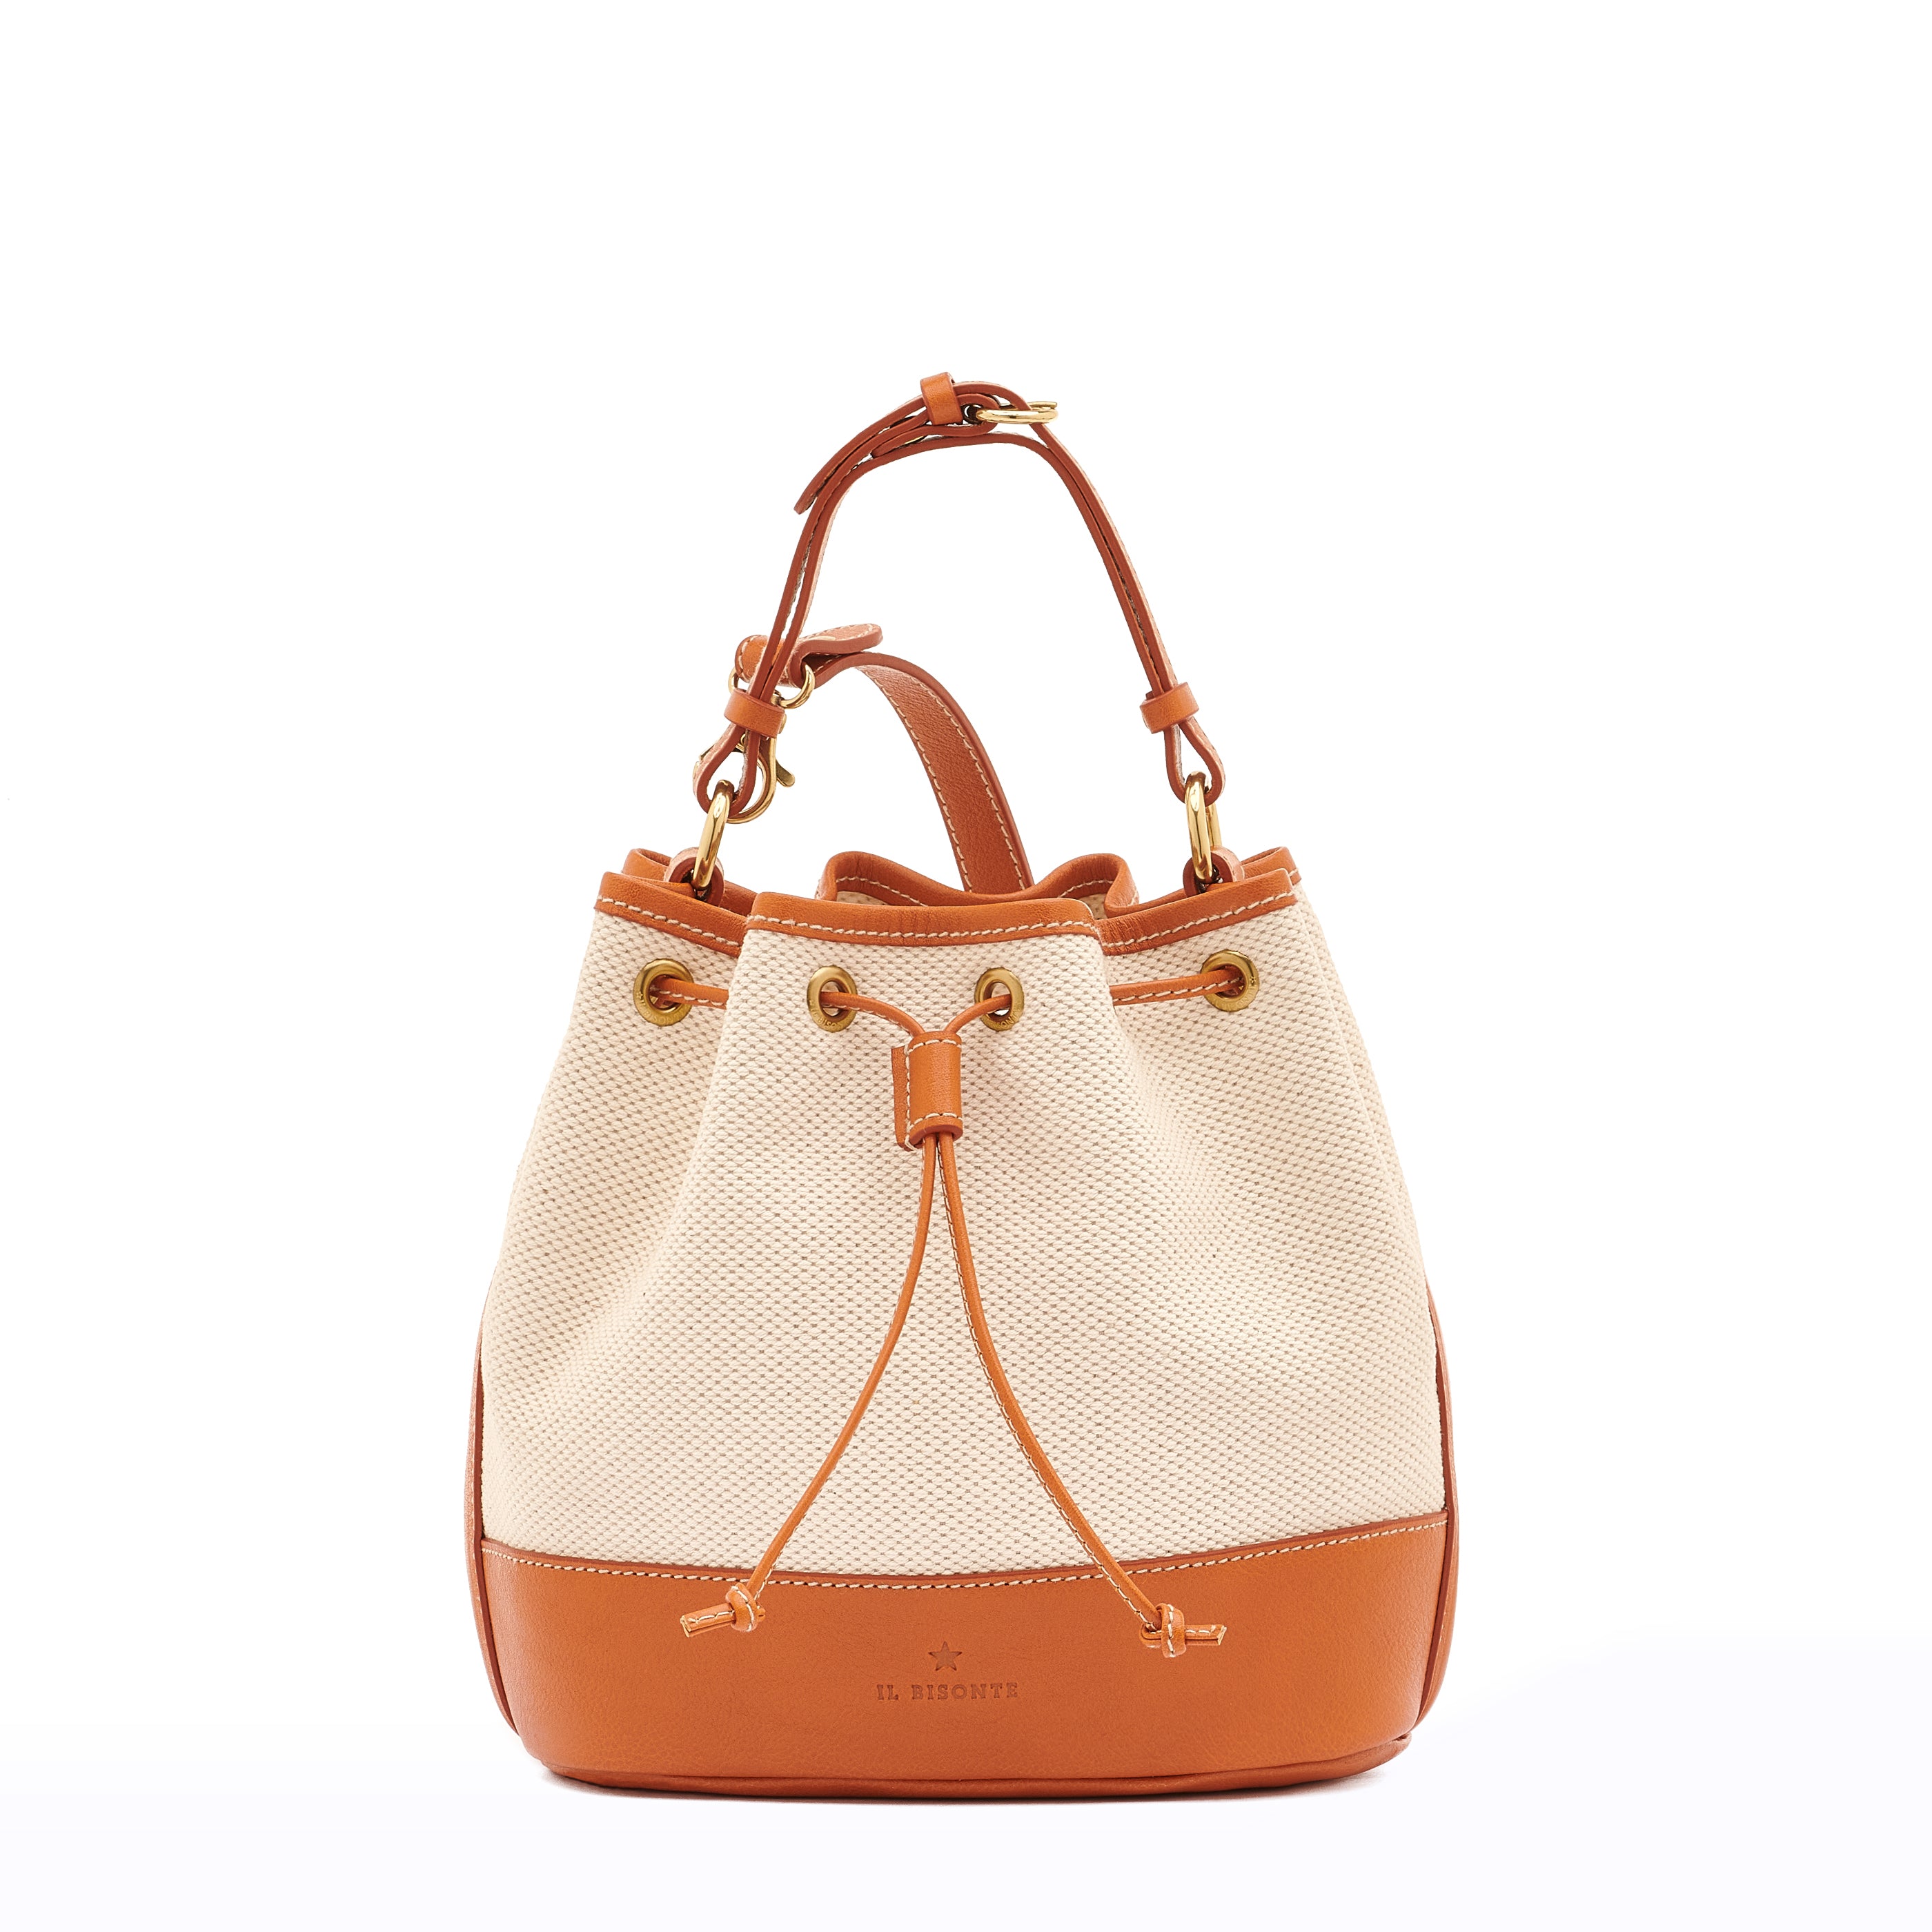 Marini | Women's bucket bag in fabric color natural / caramel